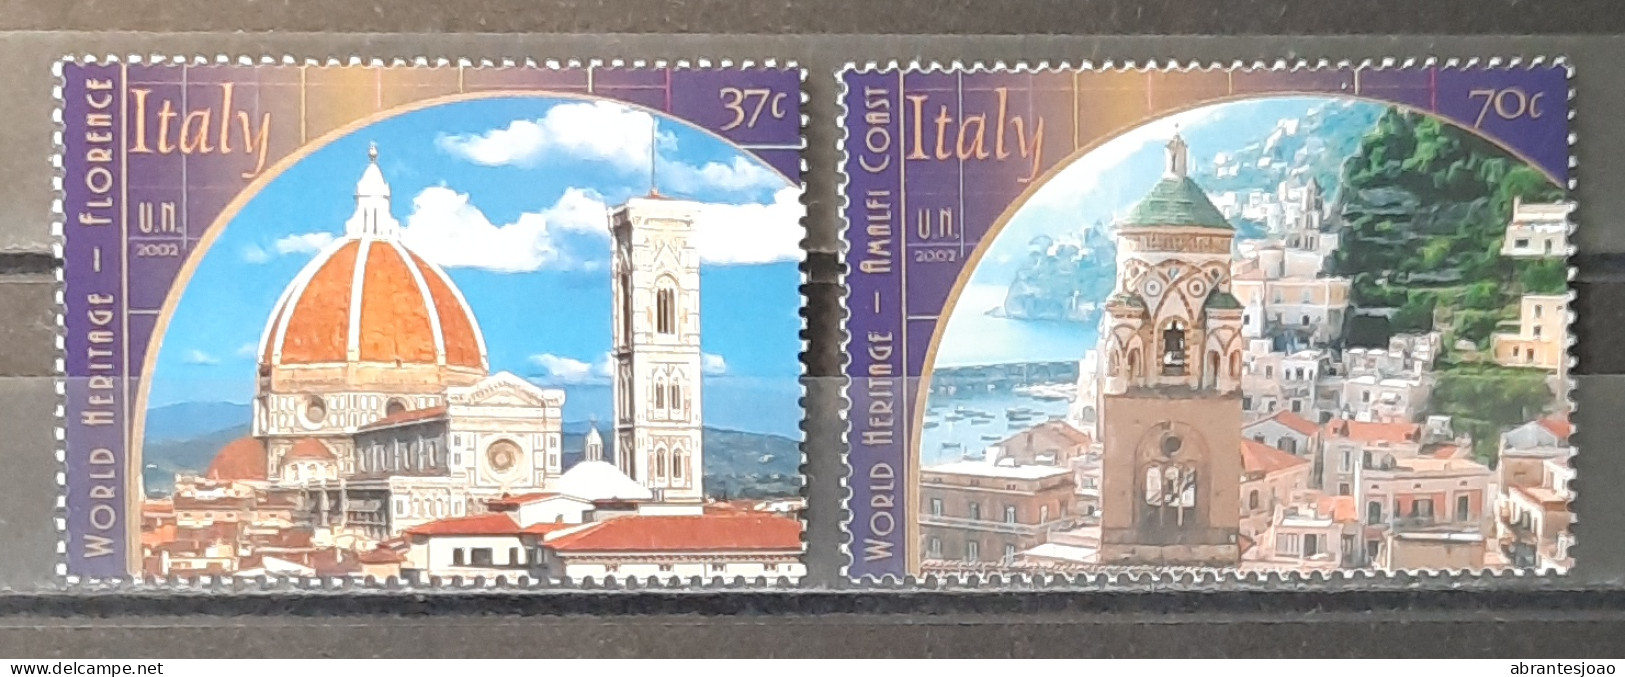 2002 - United Nations New York - MNH - Italy World Heritage - 2 Stamps - Ongebruikt